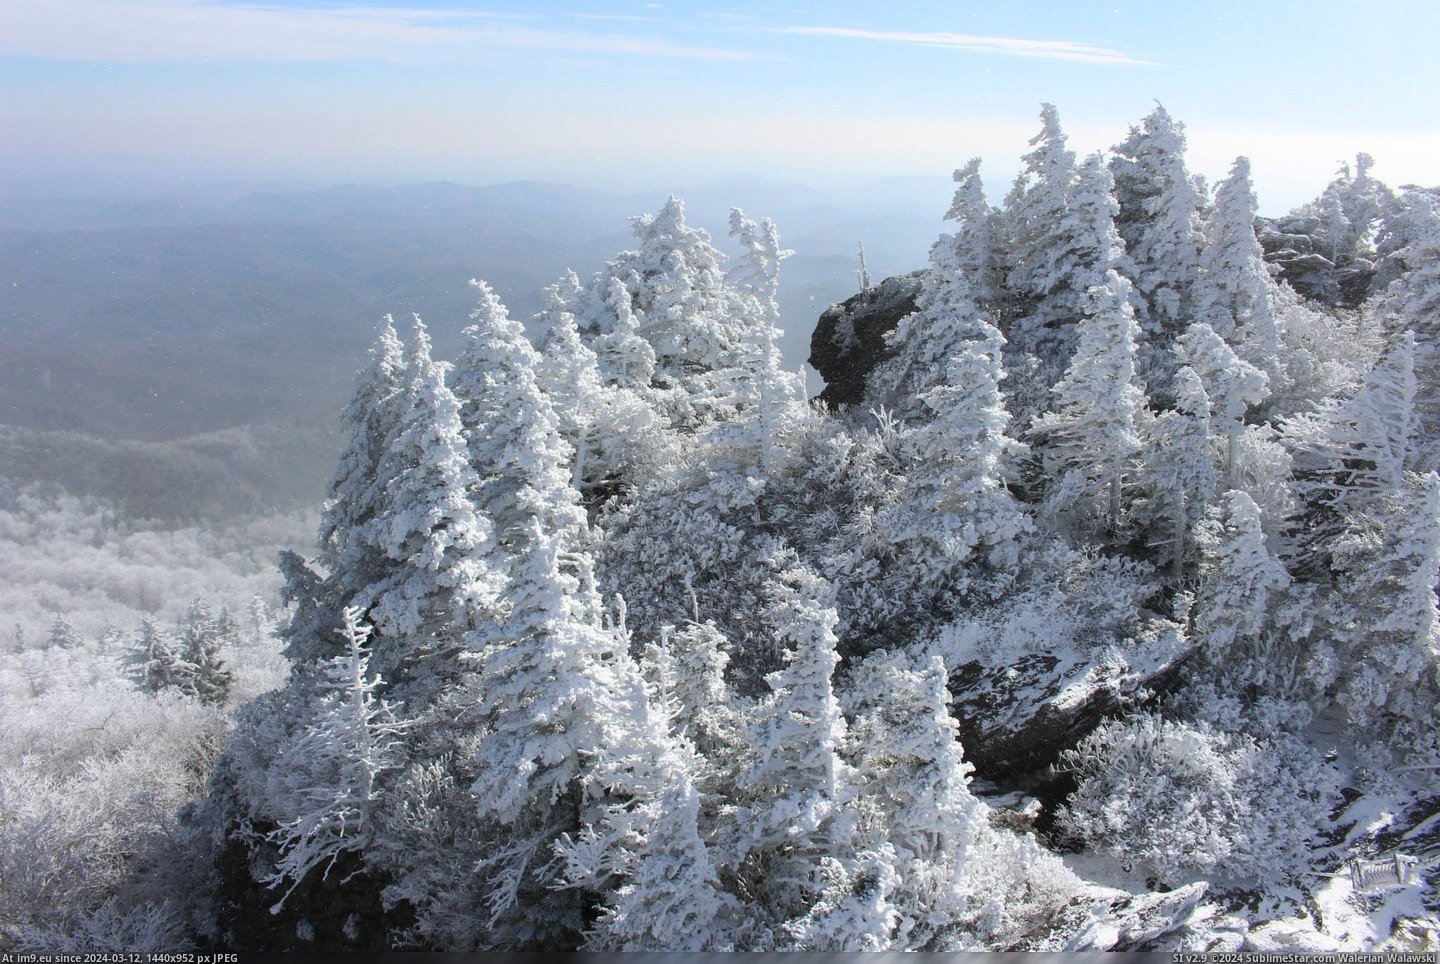 #Snow #Mountain #Grandfather #Kellen #Covered #Short [Earthporn] Grandfather Mountain Covered in Snow Today (11-14-2014) by Kellen Short - [2048 x 1366] Pic. (Obraz z album My r/EARTHPORN favs))